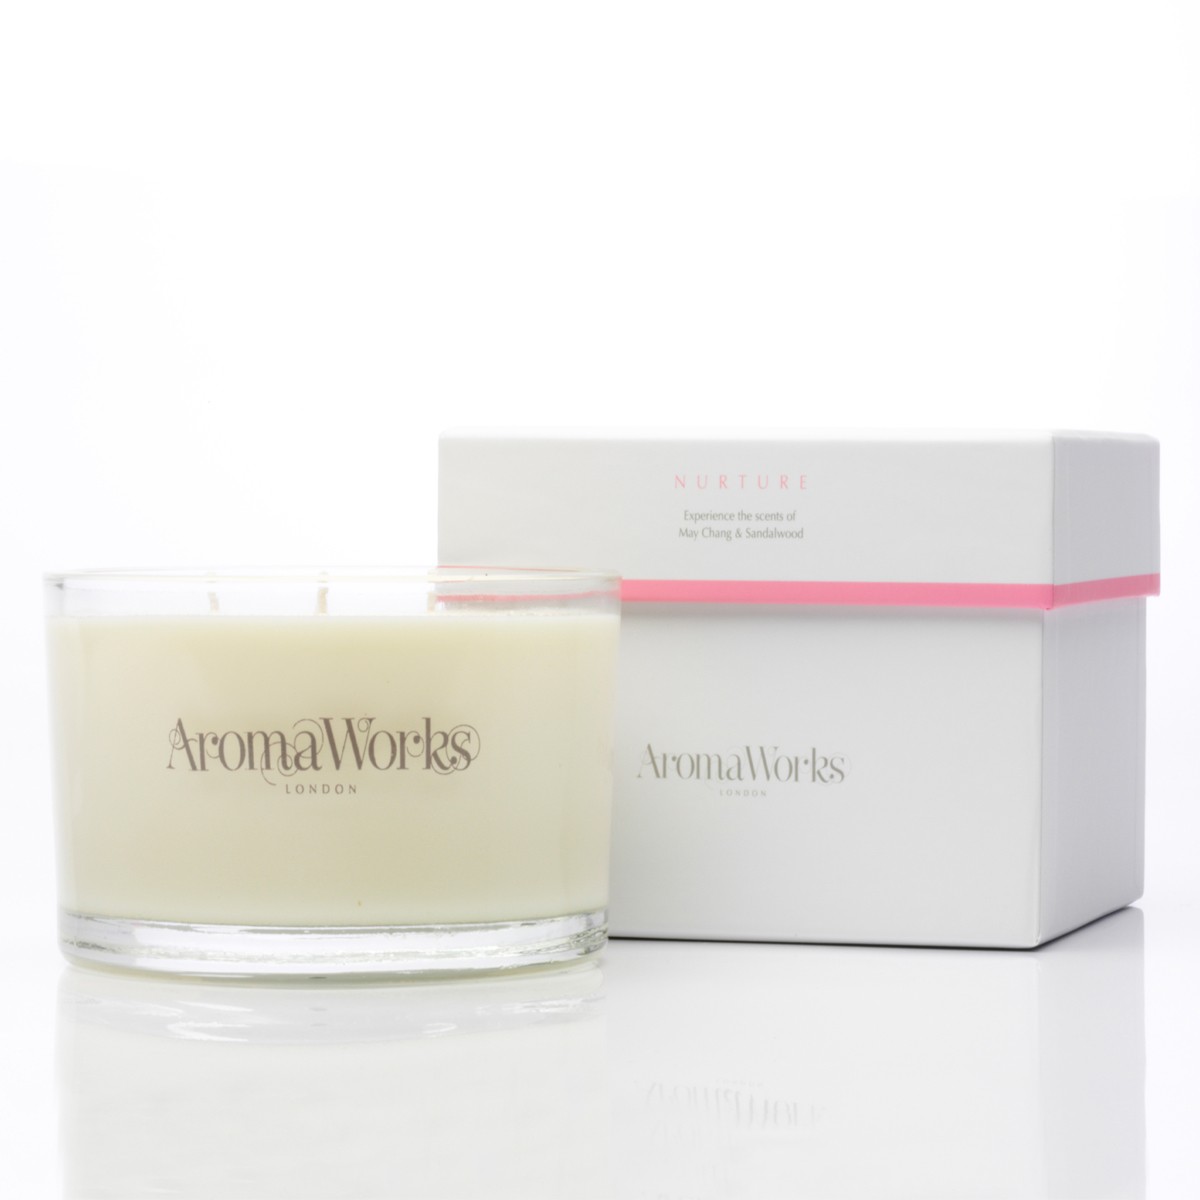 Aromaworks Nurture 3 Wicks Candle